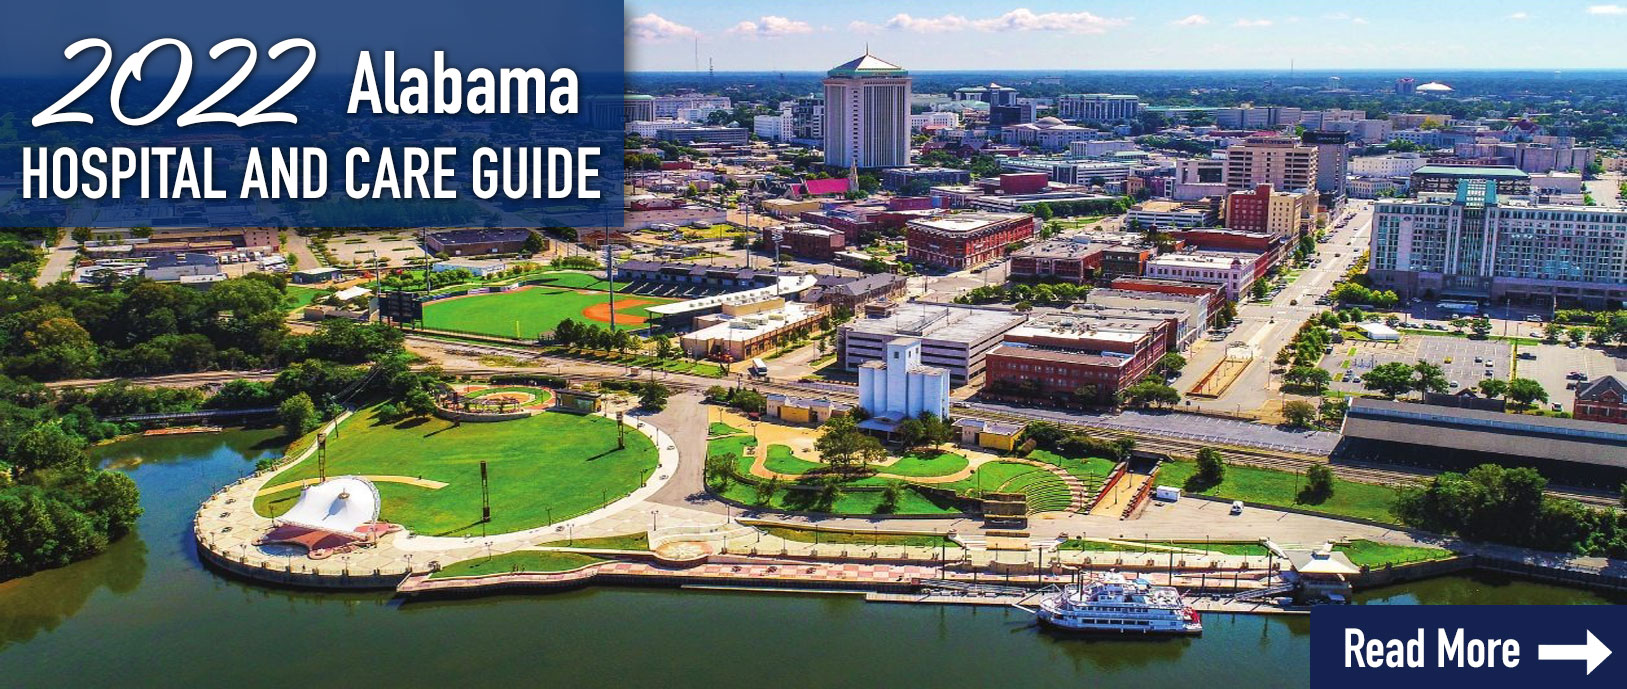 2022 Alabama
HOSPITAL AND CARE GUIDE
READ MORE ->